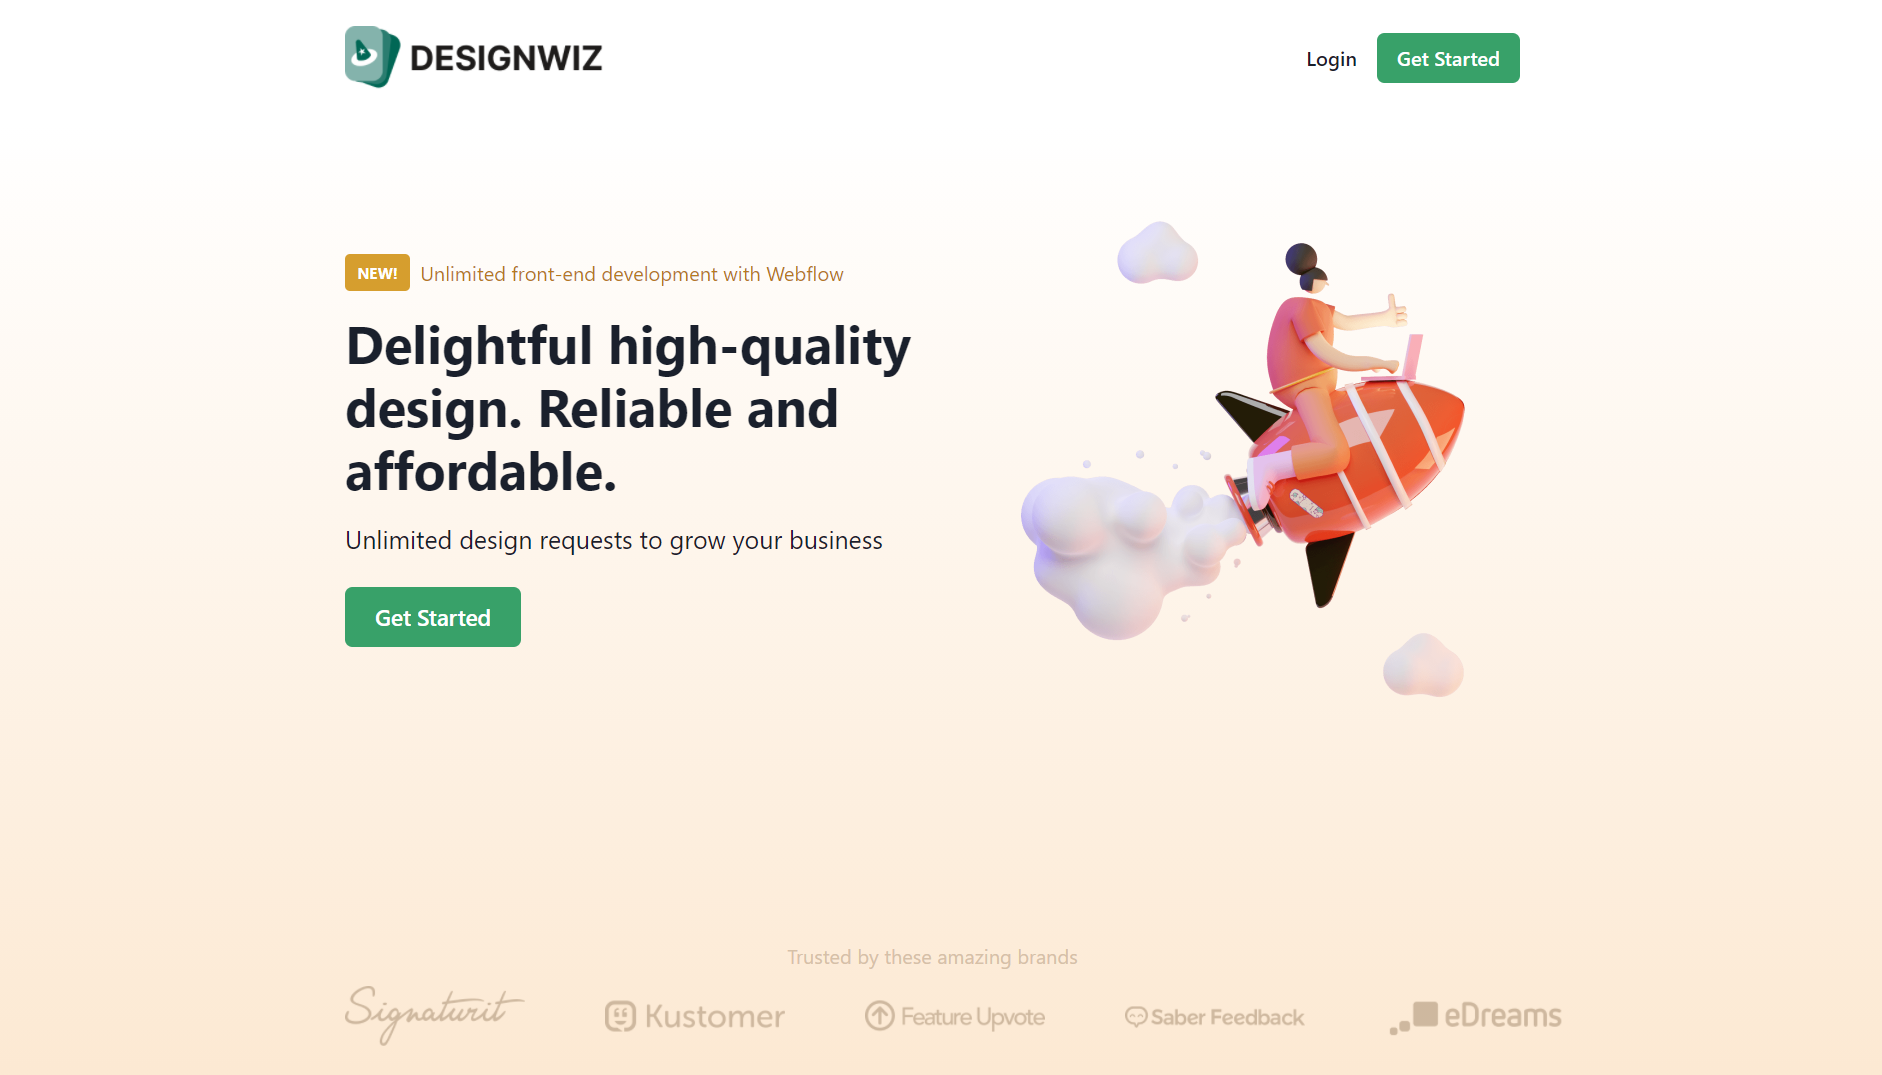 Designwiz